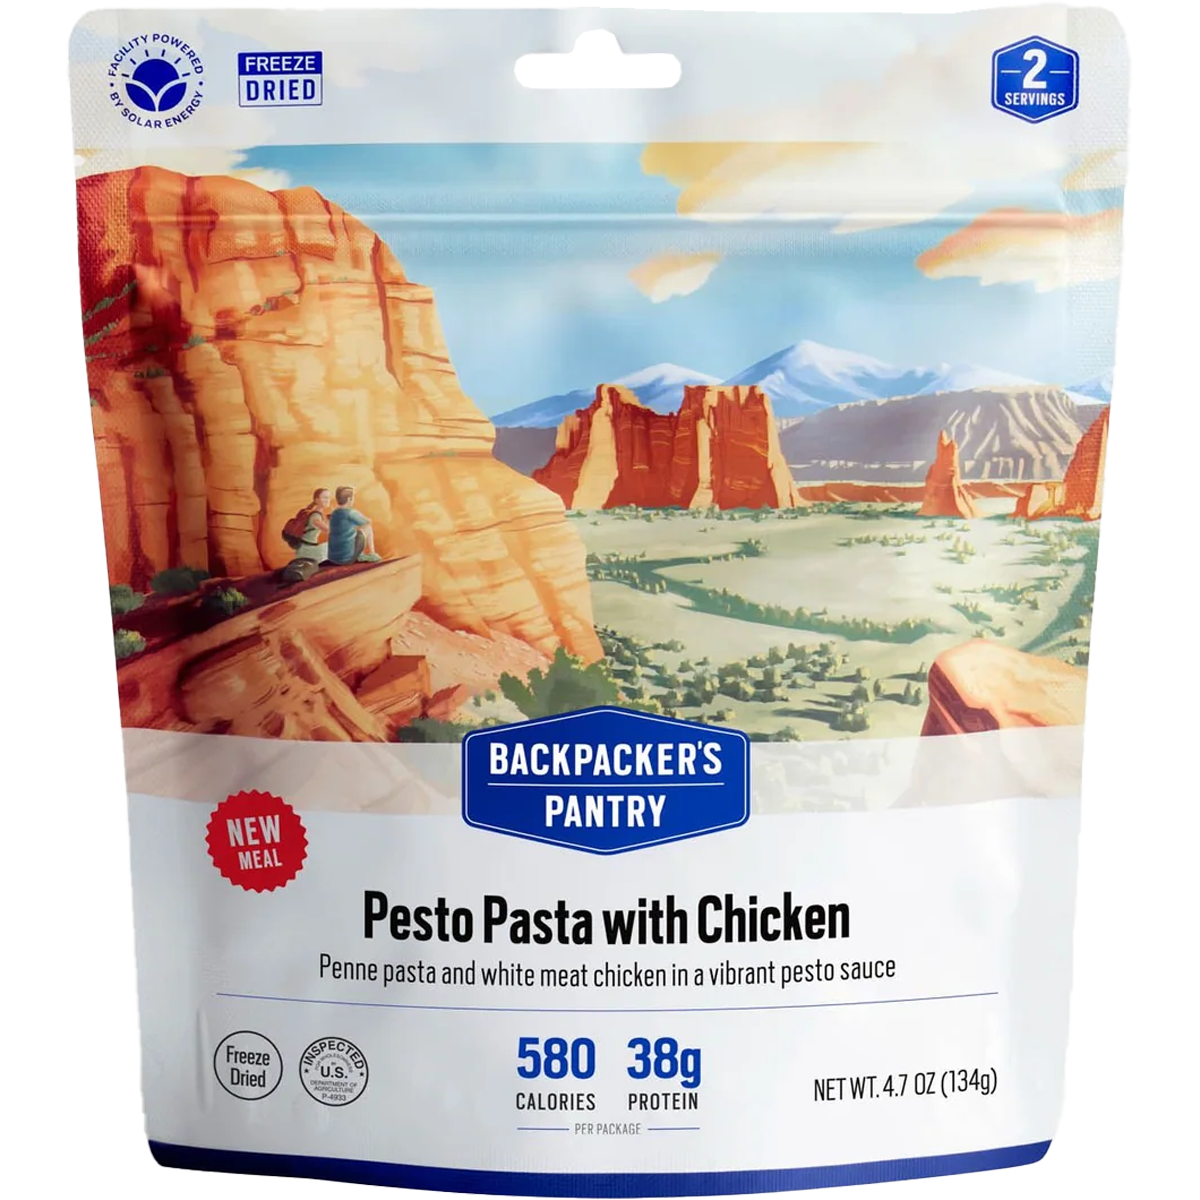 Pesto Pasta with Chicken (2 Servings) alternate view